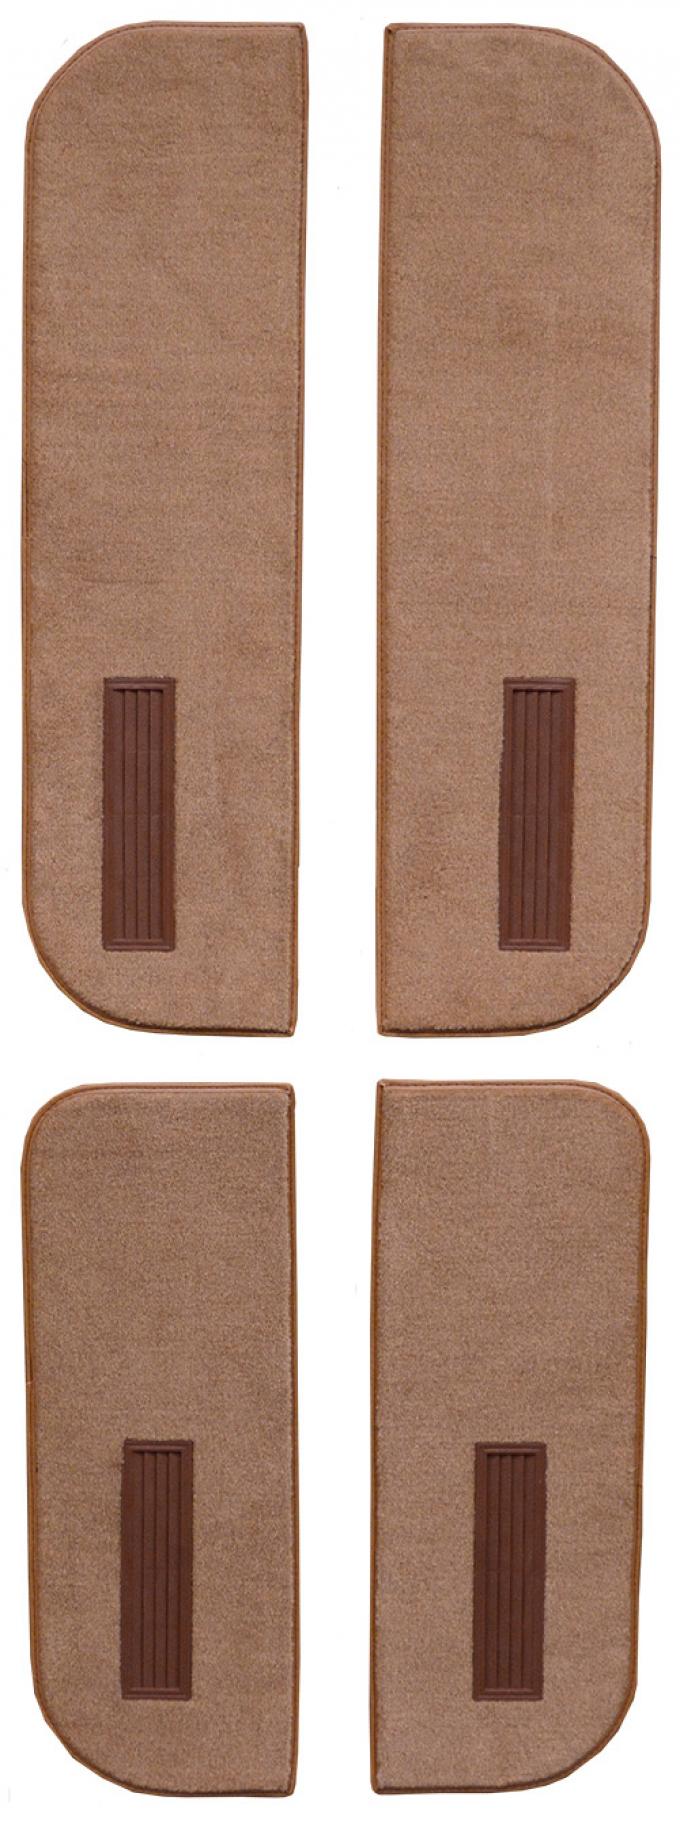 ACC 1974-1986 Chevrolet C10 Suburban Door Panel Inserts on Cardboard w/Vents 4pc Cutpile Carpet